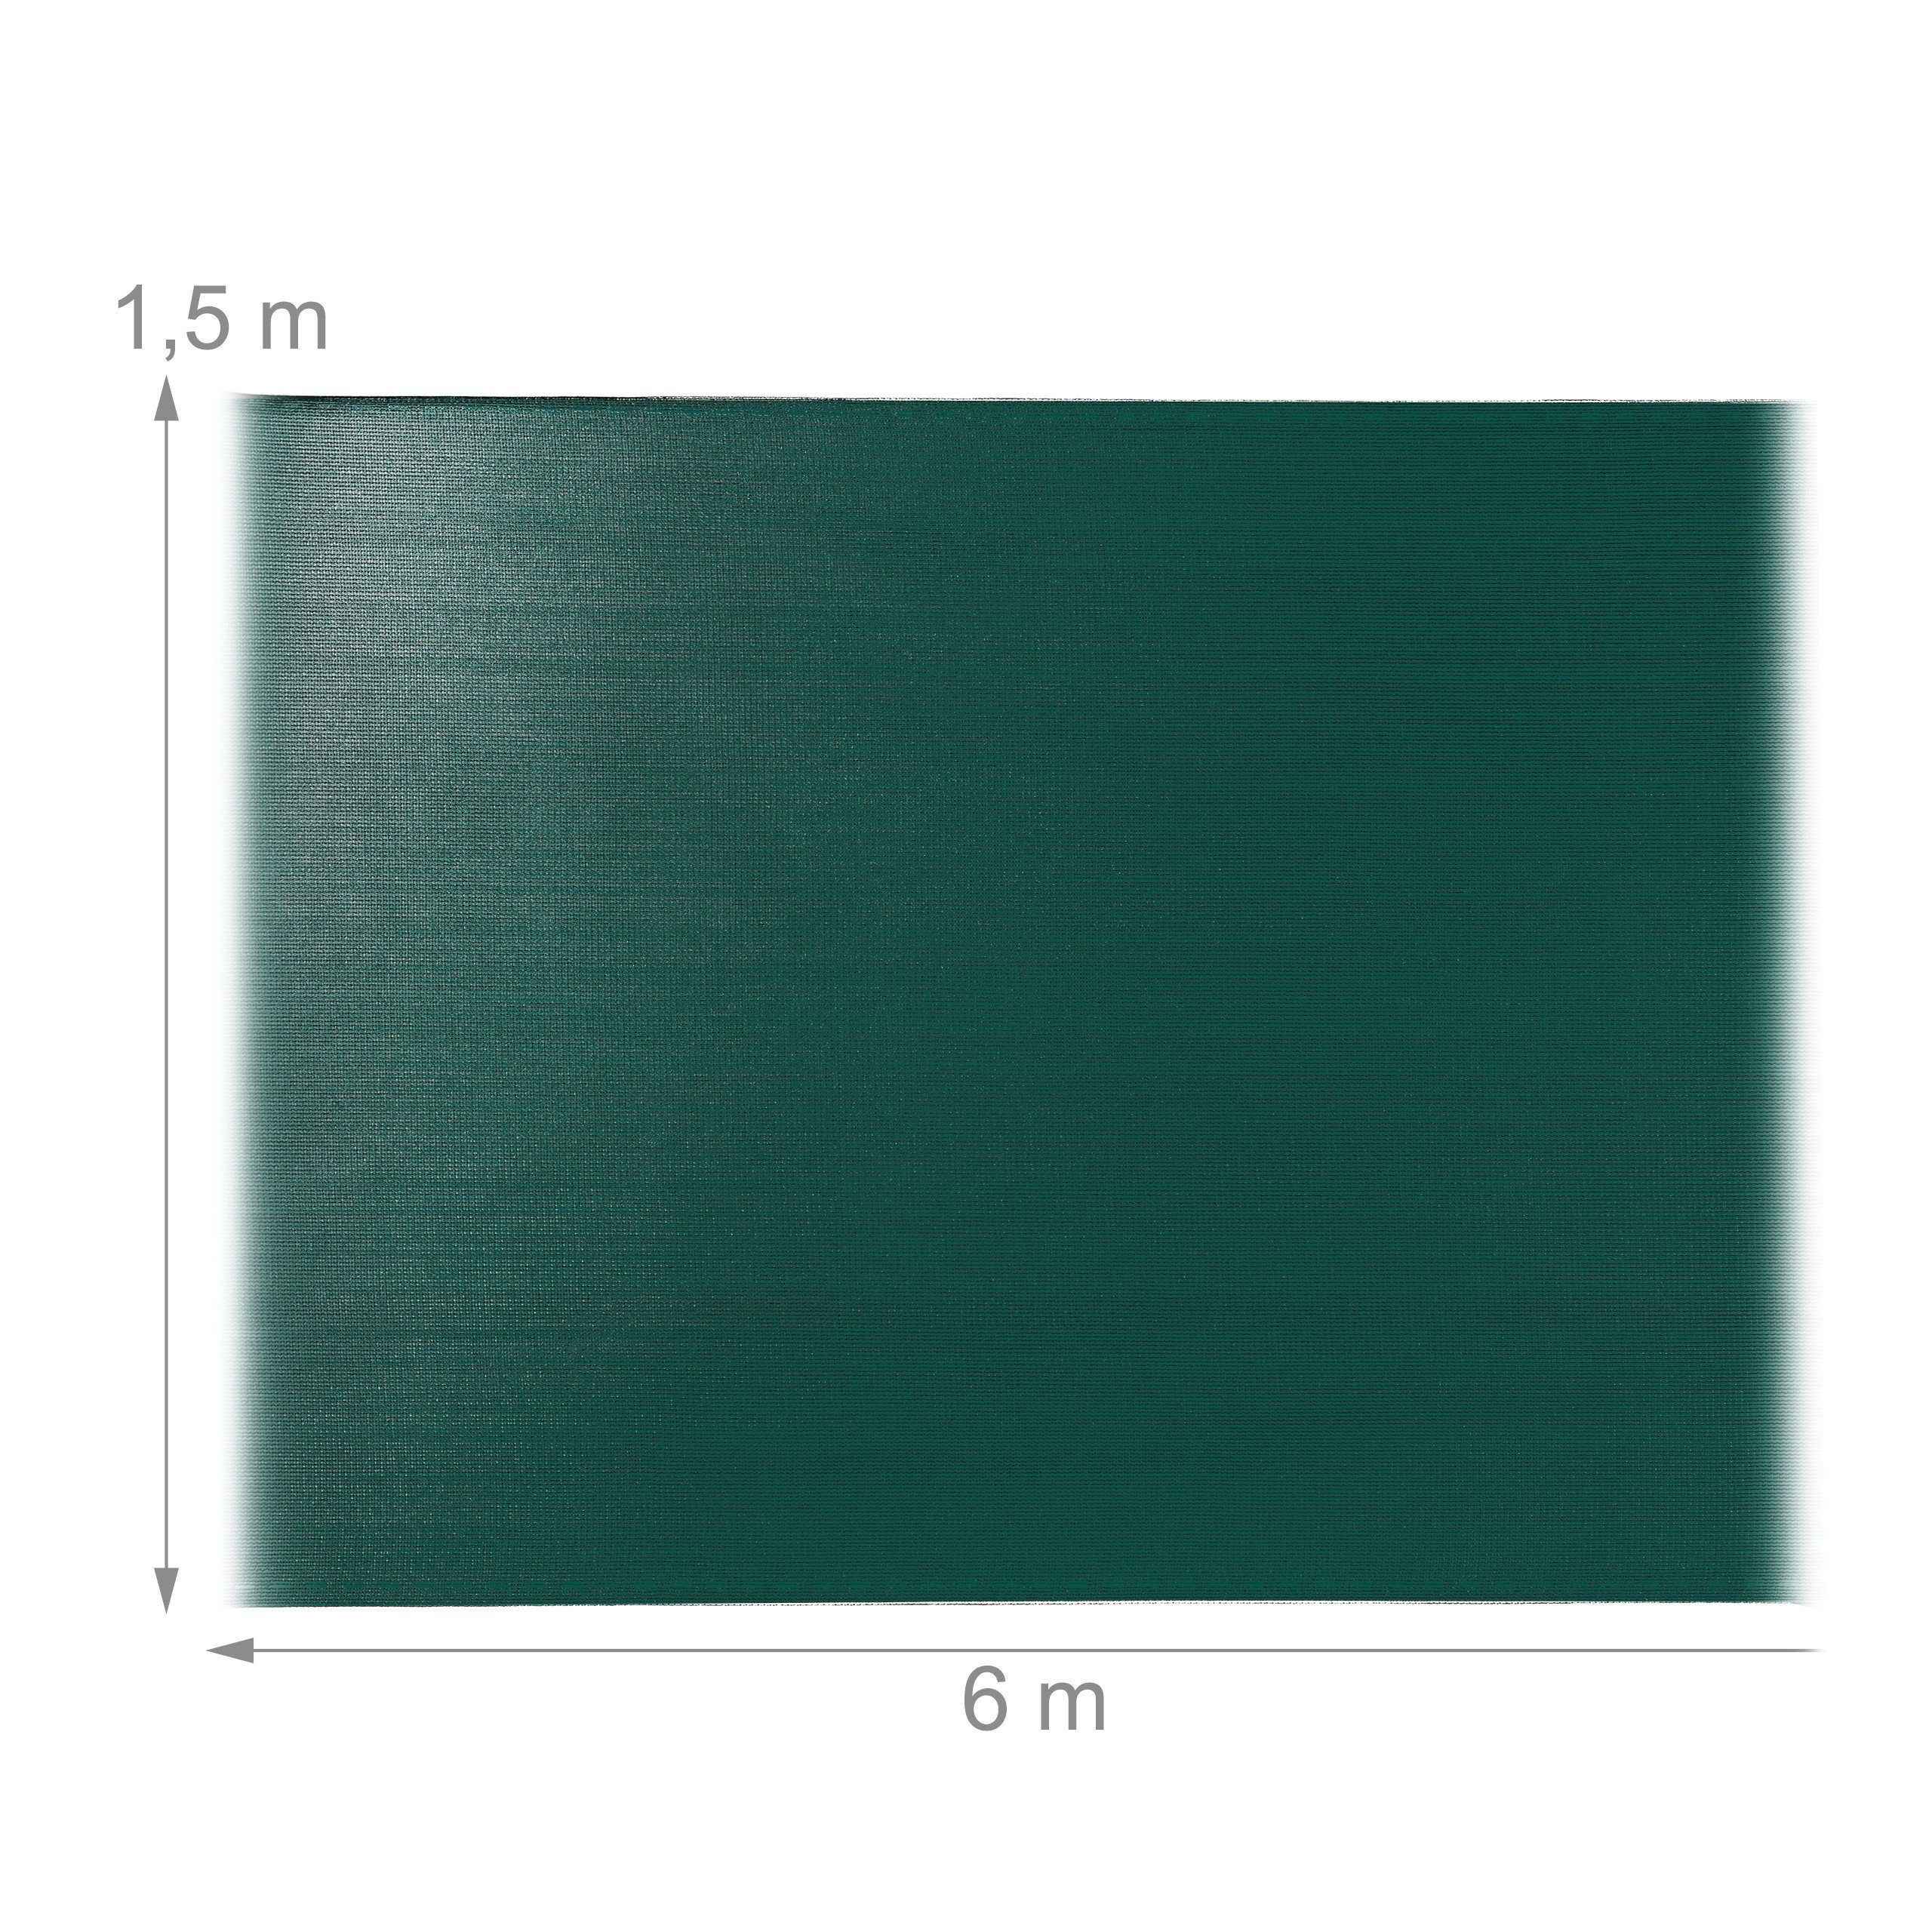 6 1,5m, Blende 1,5 relaxdays grün x Meter Zaunblende